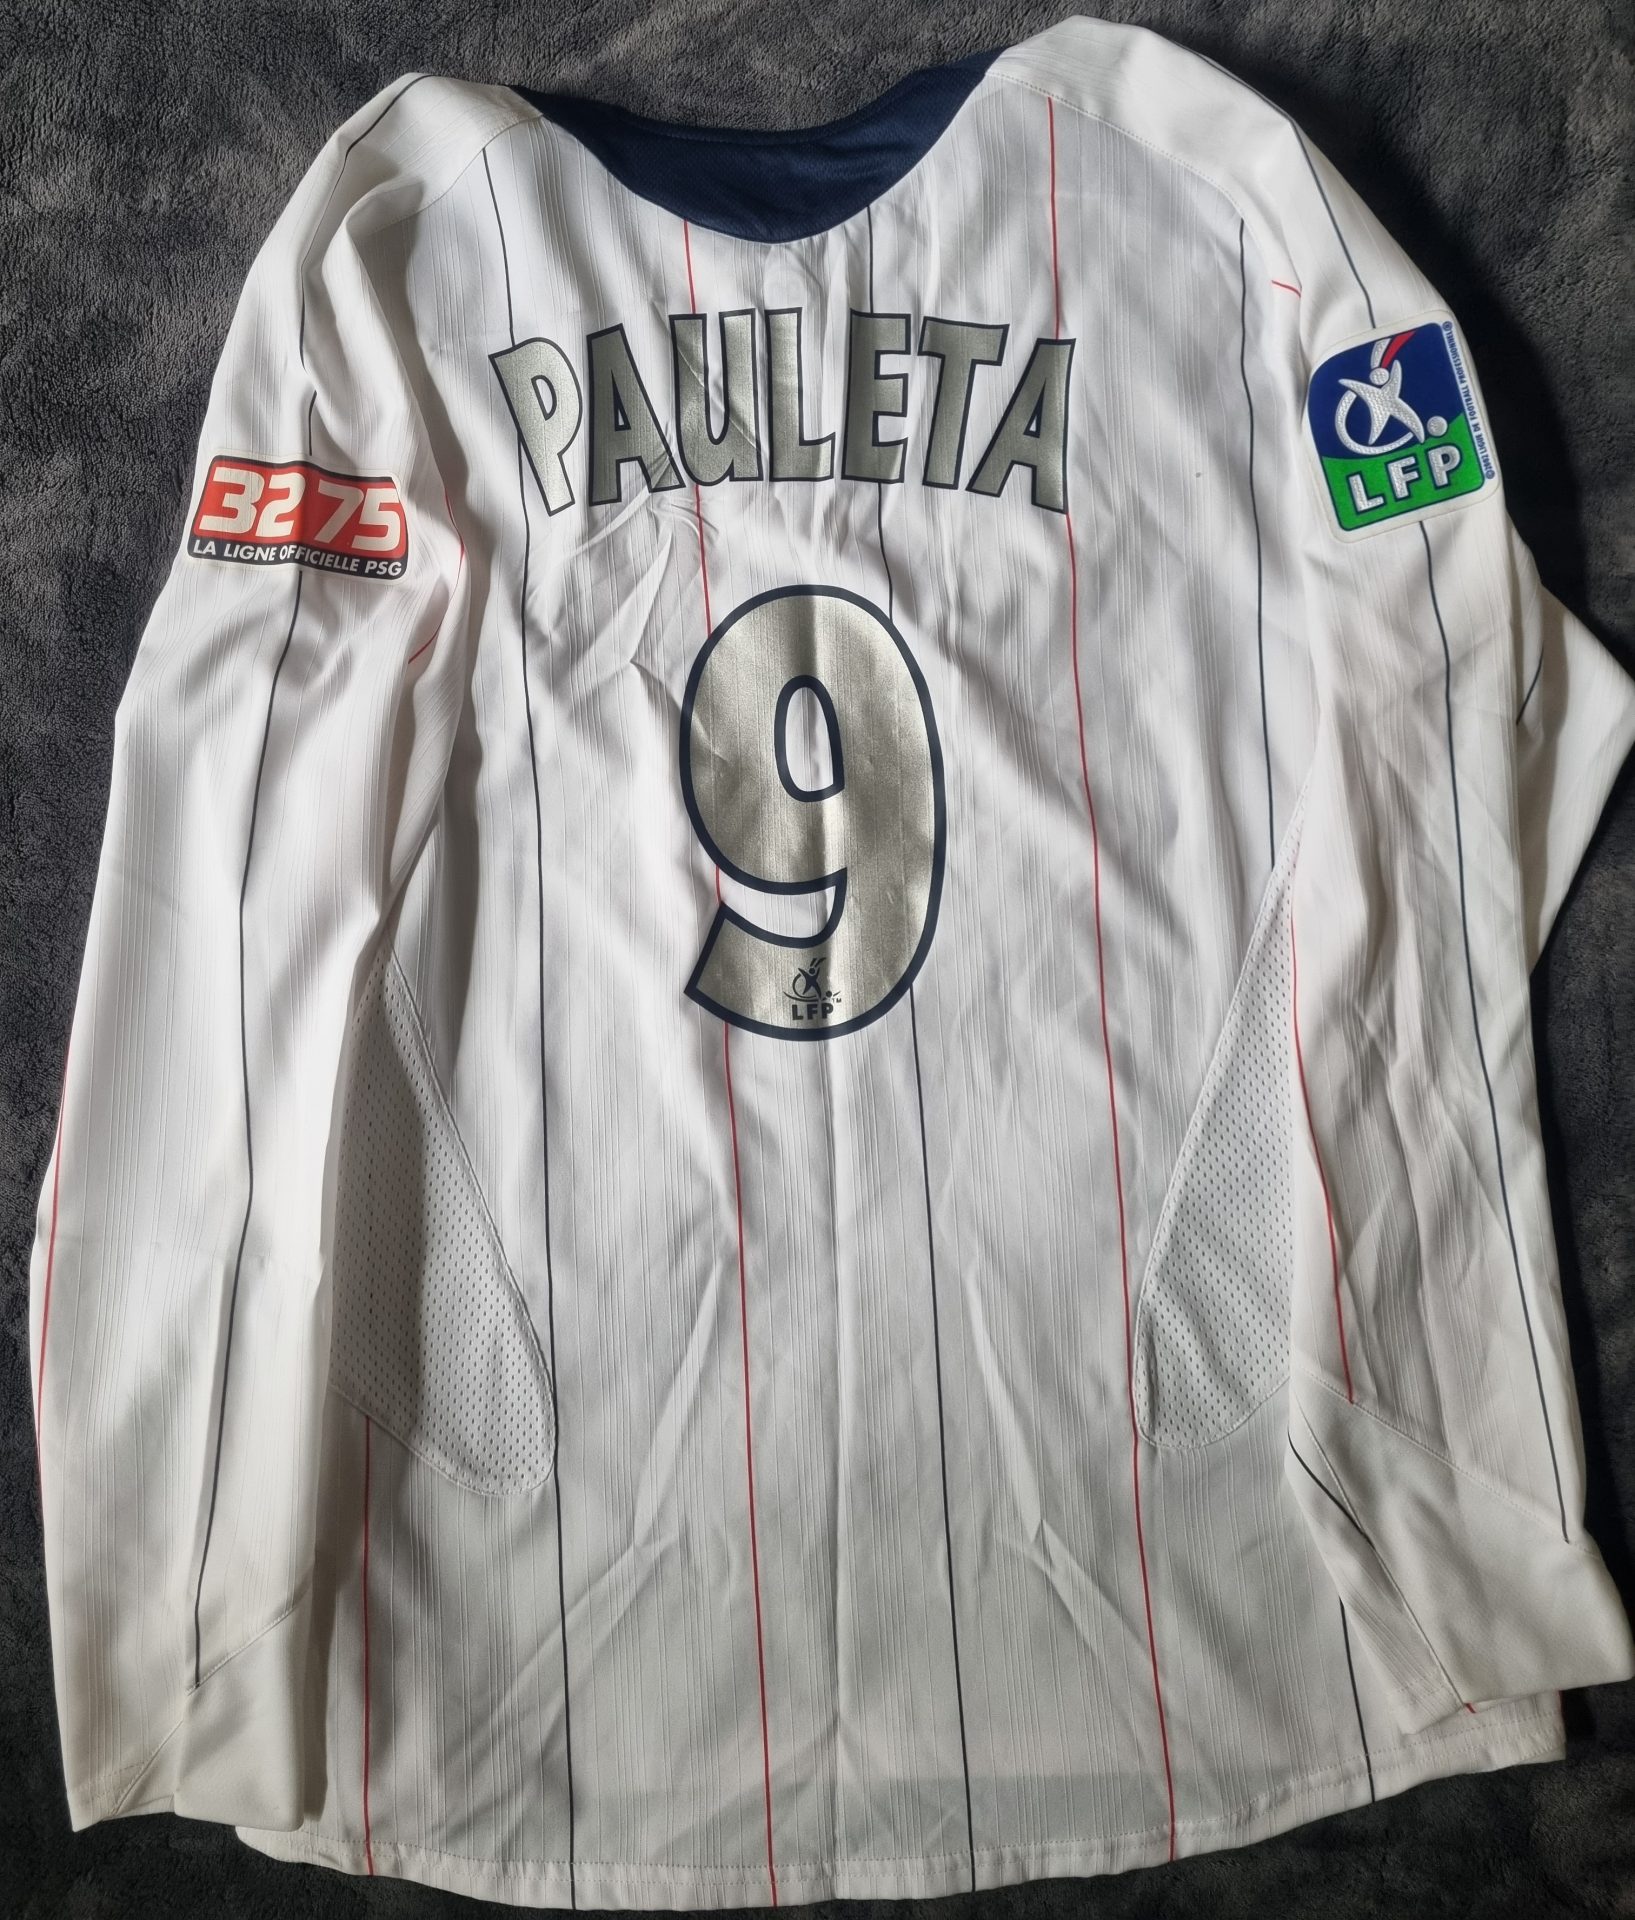 PSG 2006/07 Pauleta - Medium - YFS - Your Football Shirt